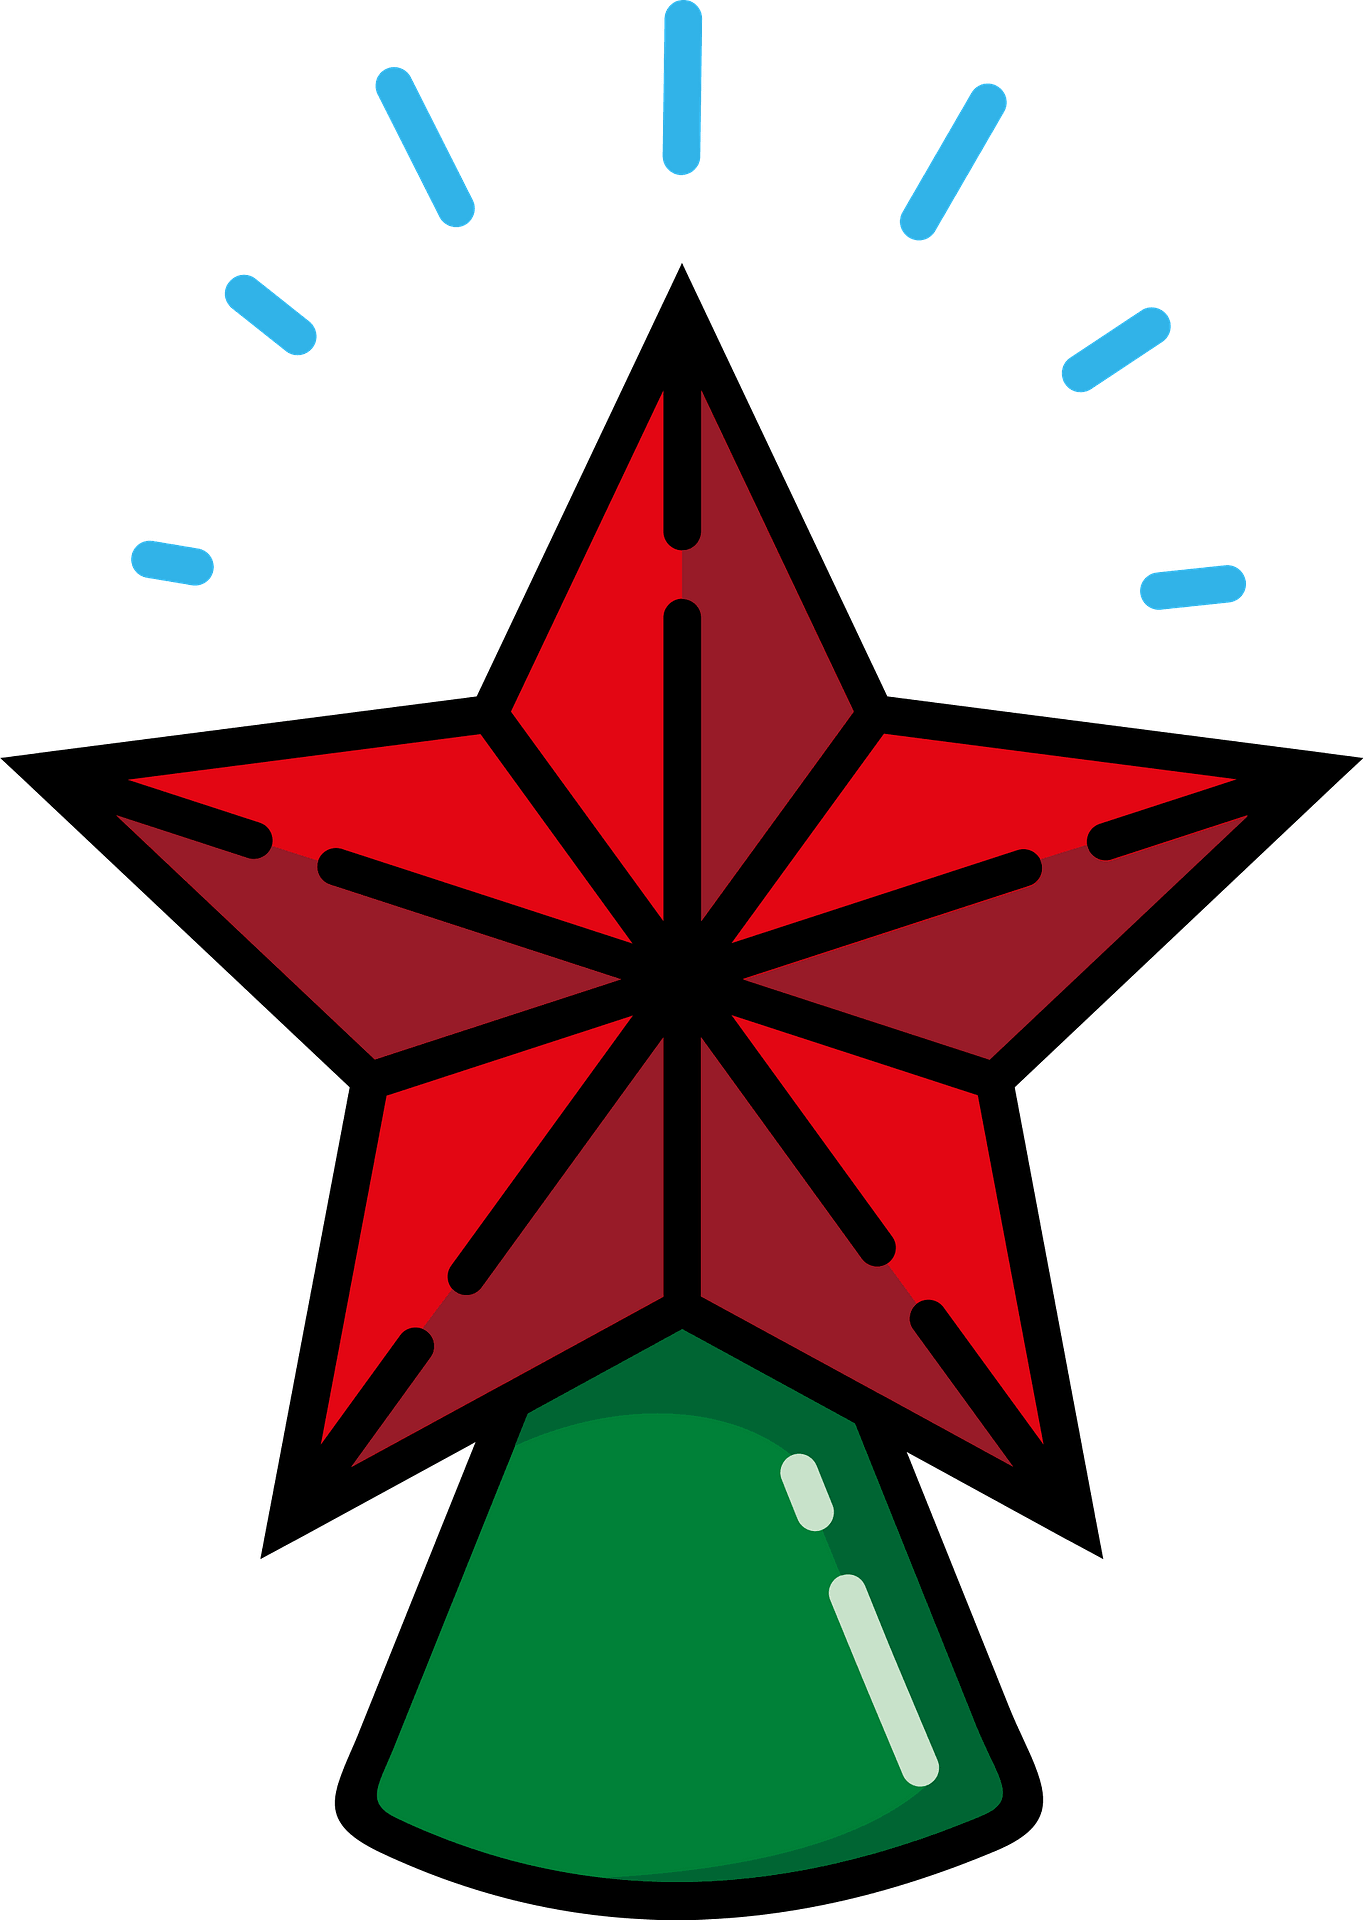 Christmas Stars Images Clip Art - Christmas Star Clip Art Png - Clip ...